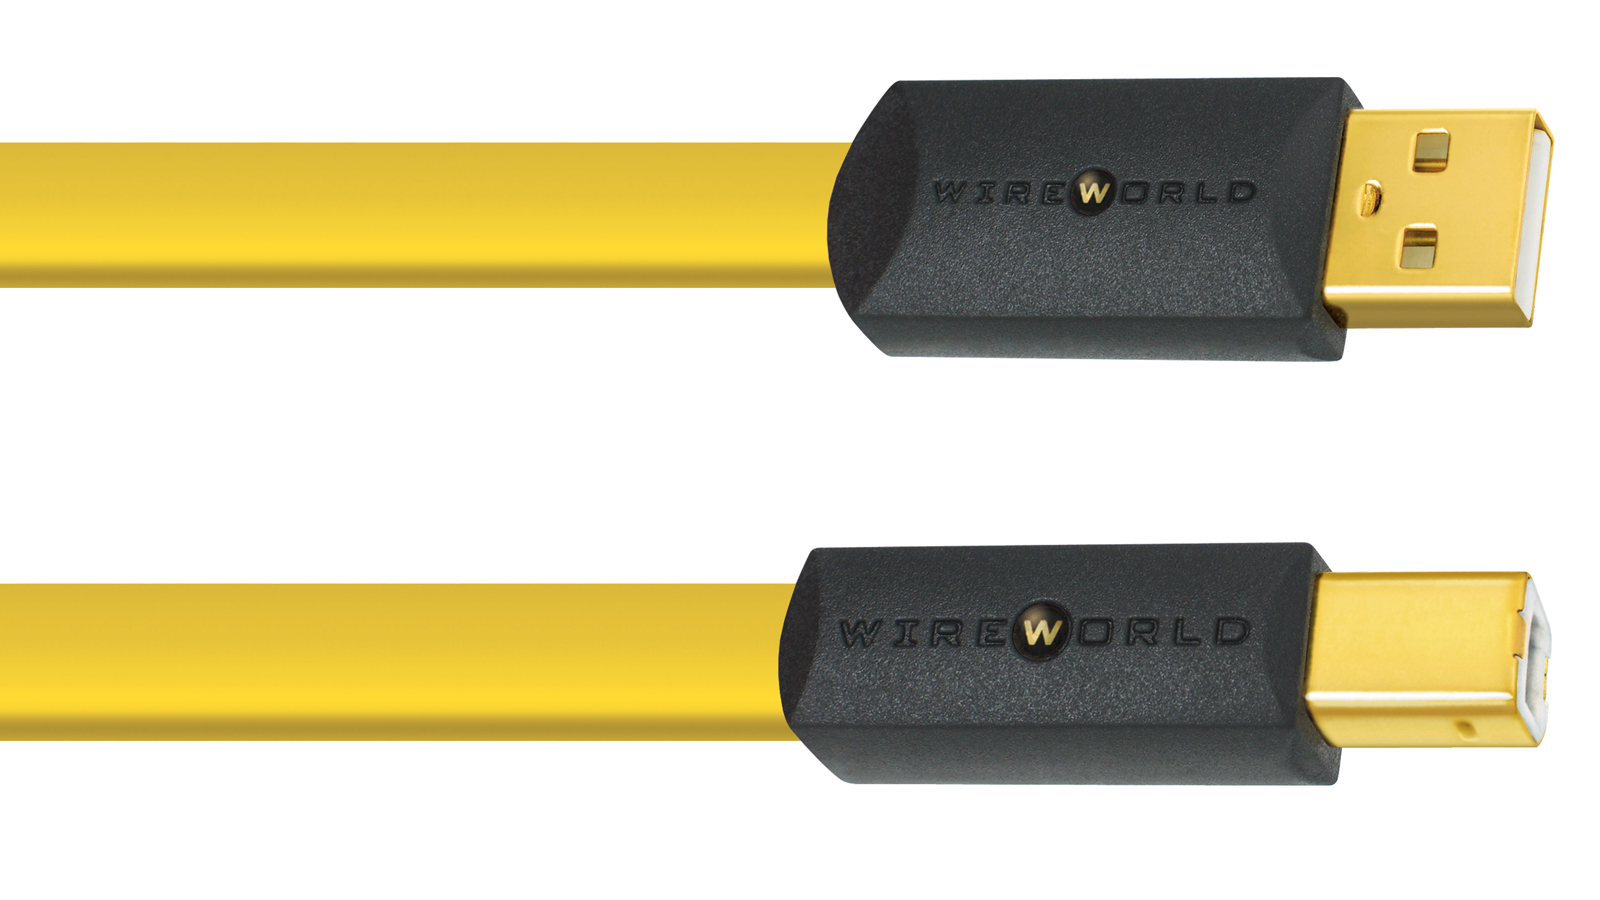 WIREWORLD Chroma 8 USB 2.0